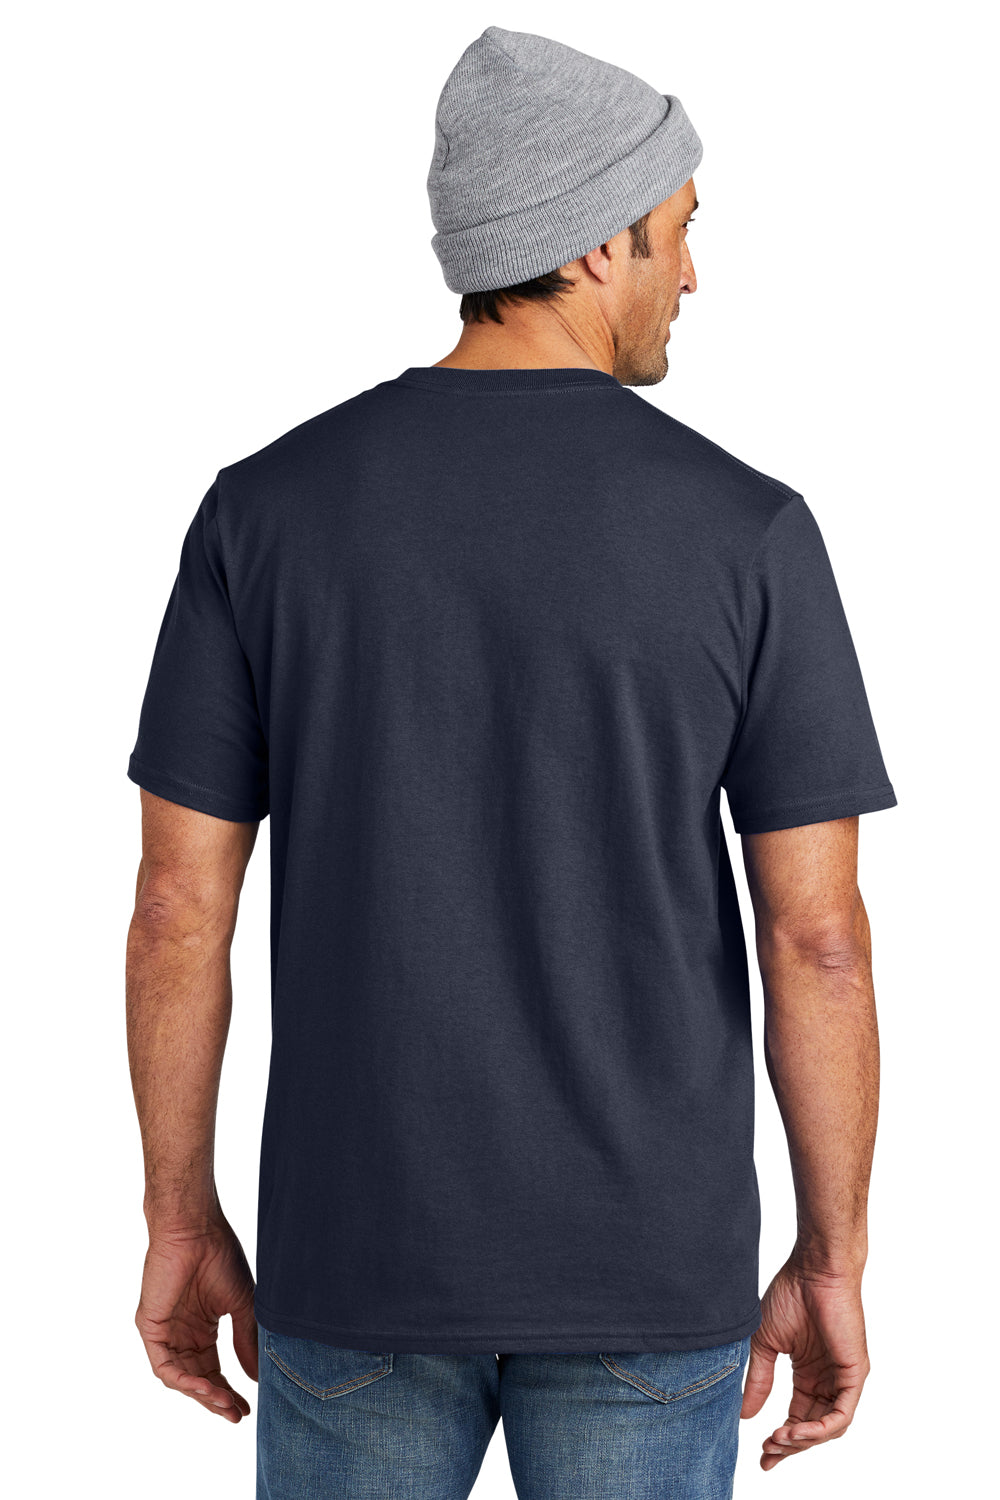 Volunteer Knitwear VL100P USA Made All American Short Sleeve Crewneck T-Shirt w/ Pocket Strong Navy Blue Back